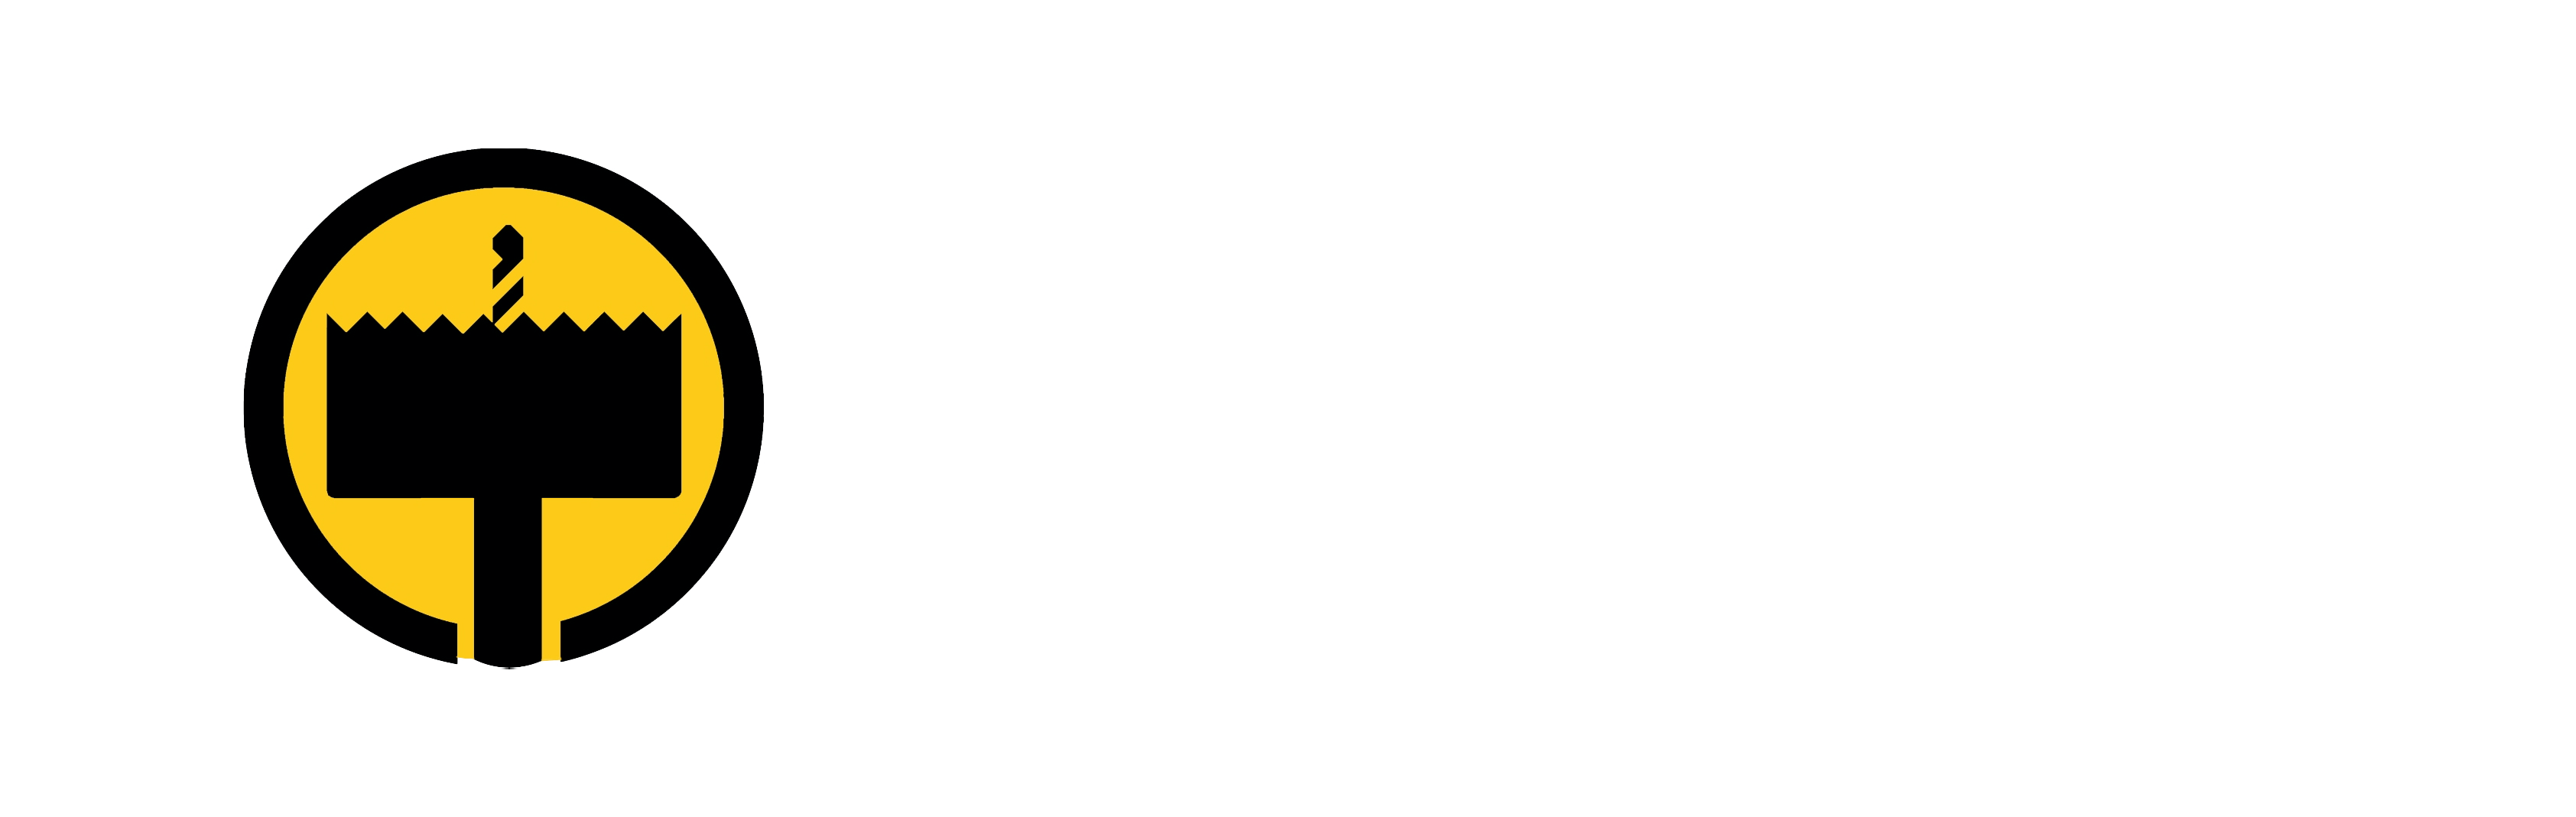 Tonisco logo wide website